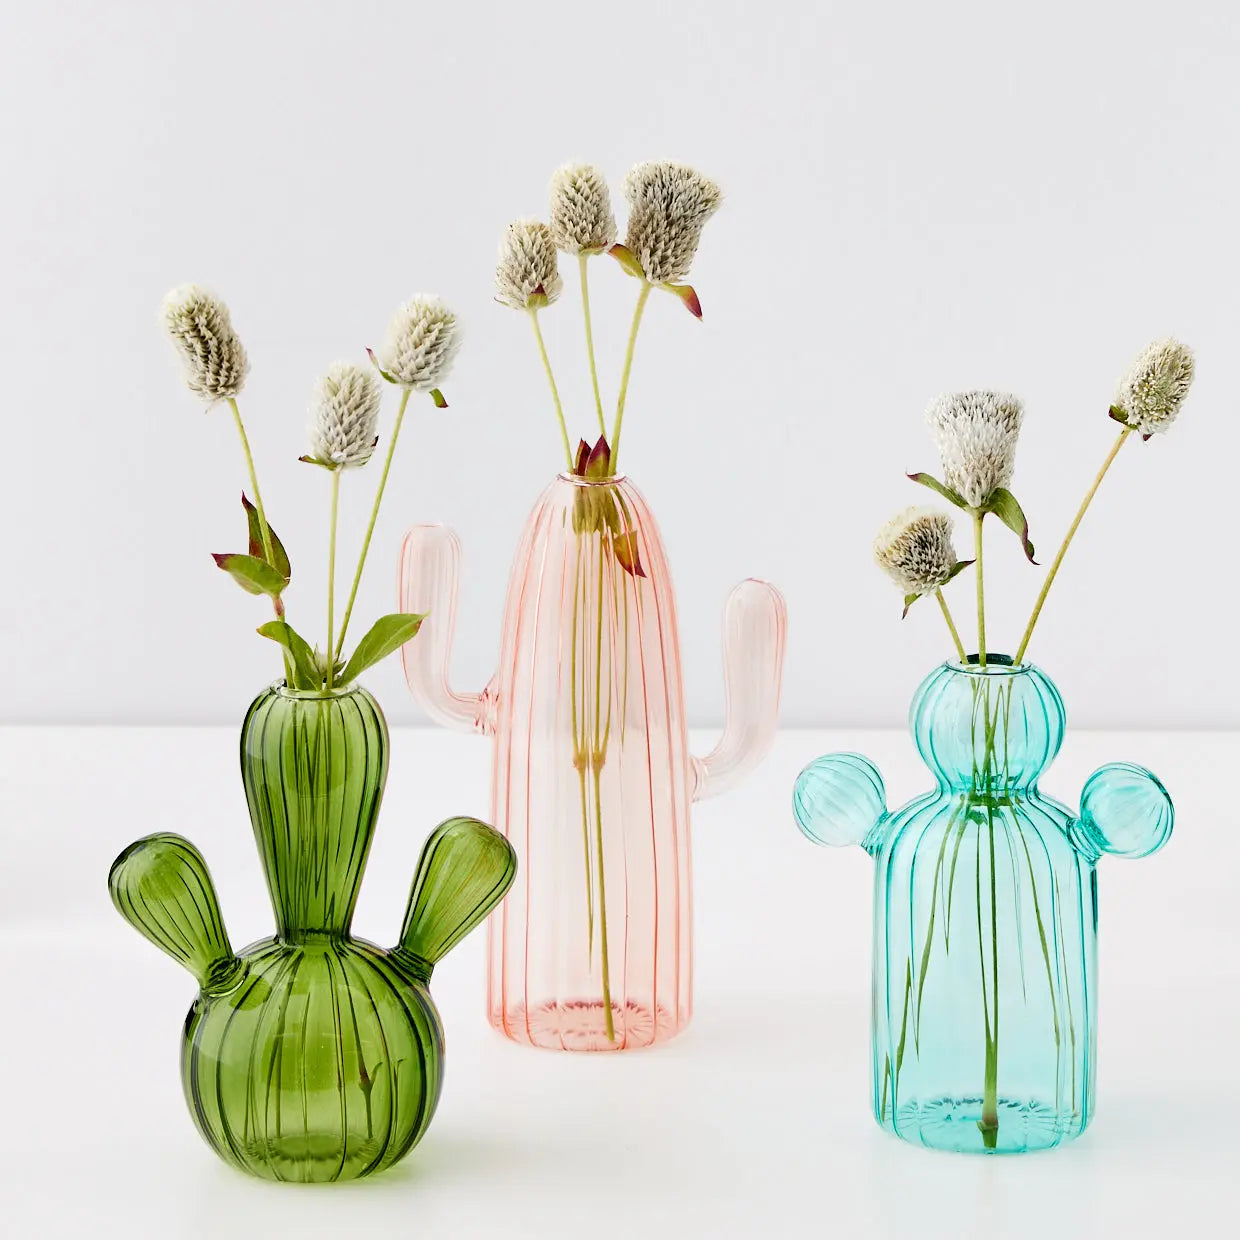 Cactus Small Coloured Glass Vase Green - GigiandTom